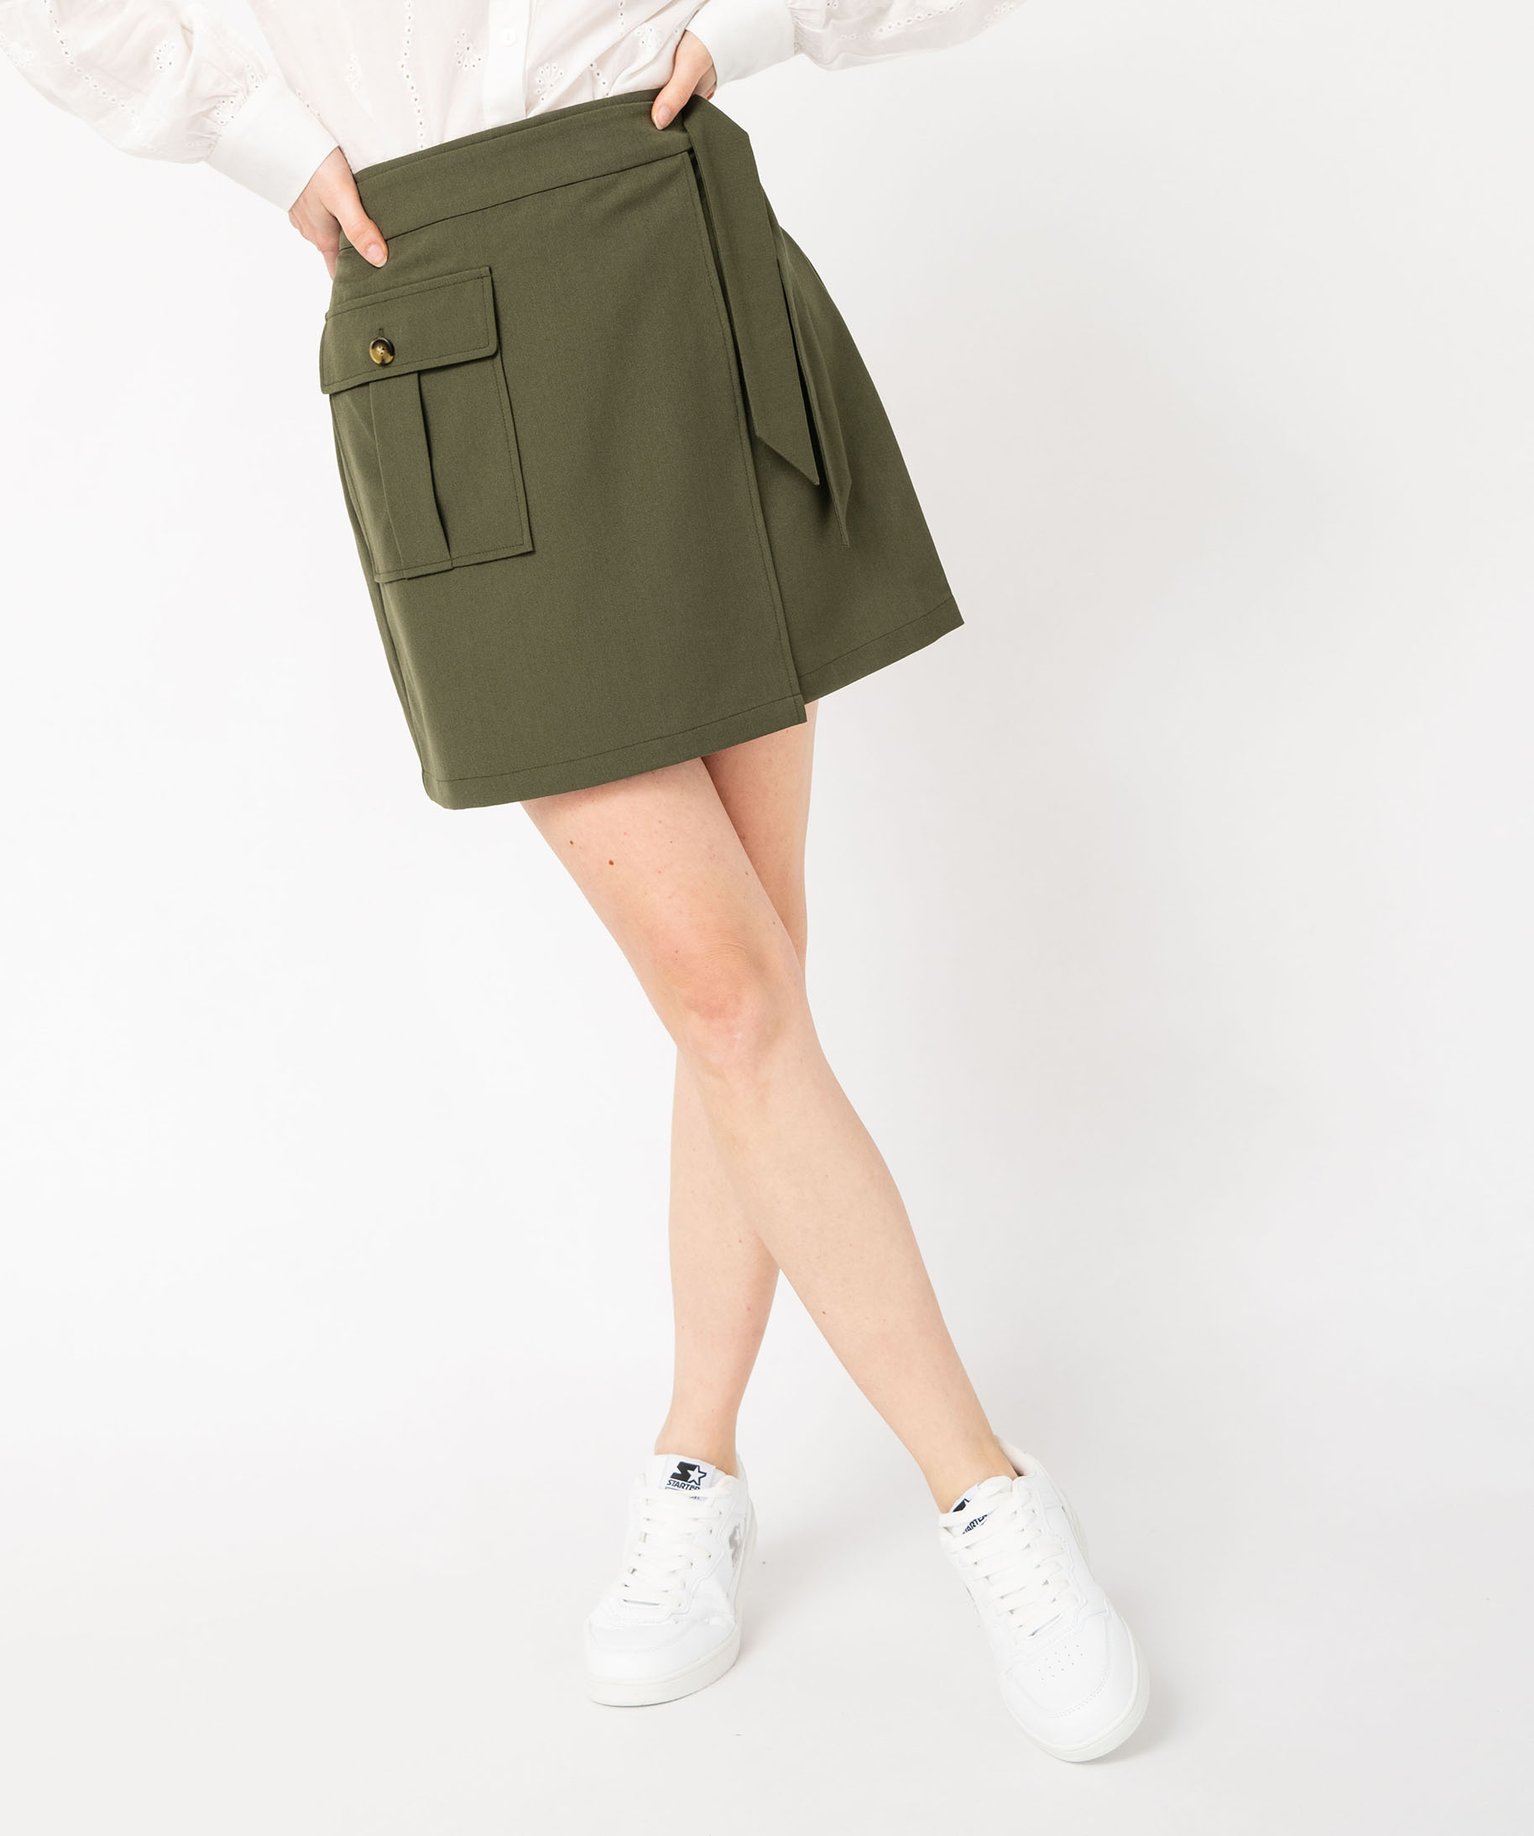 jupe courte portefeuille a poche femme vert